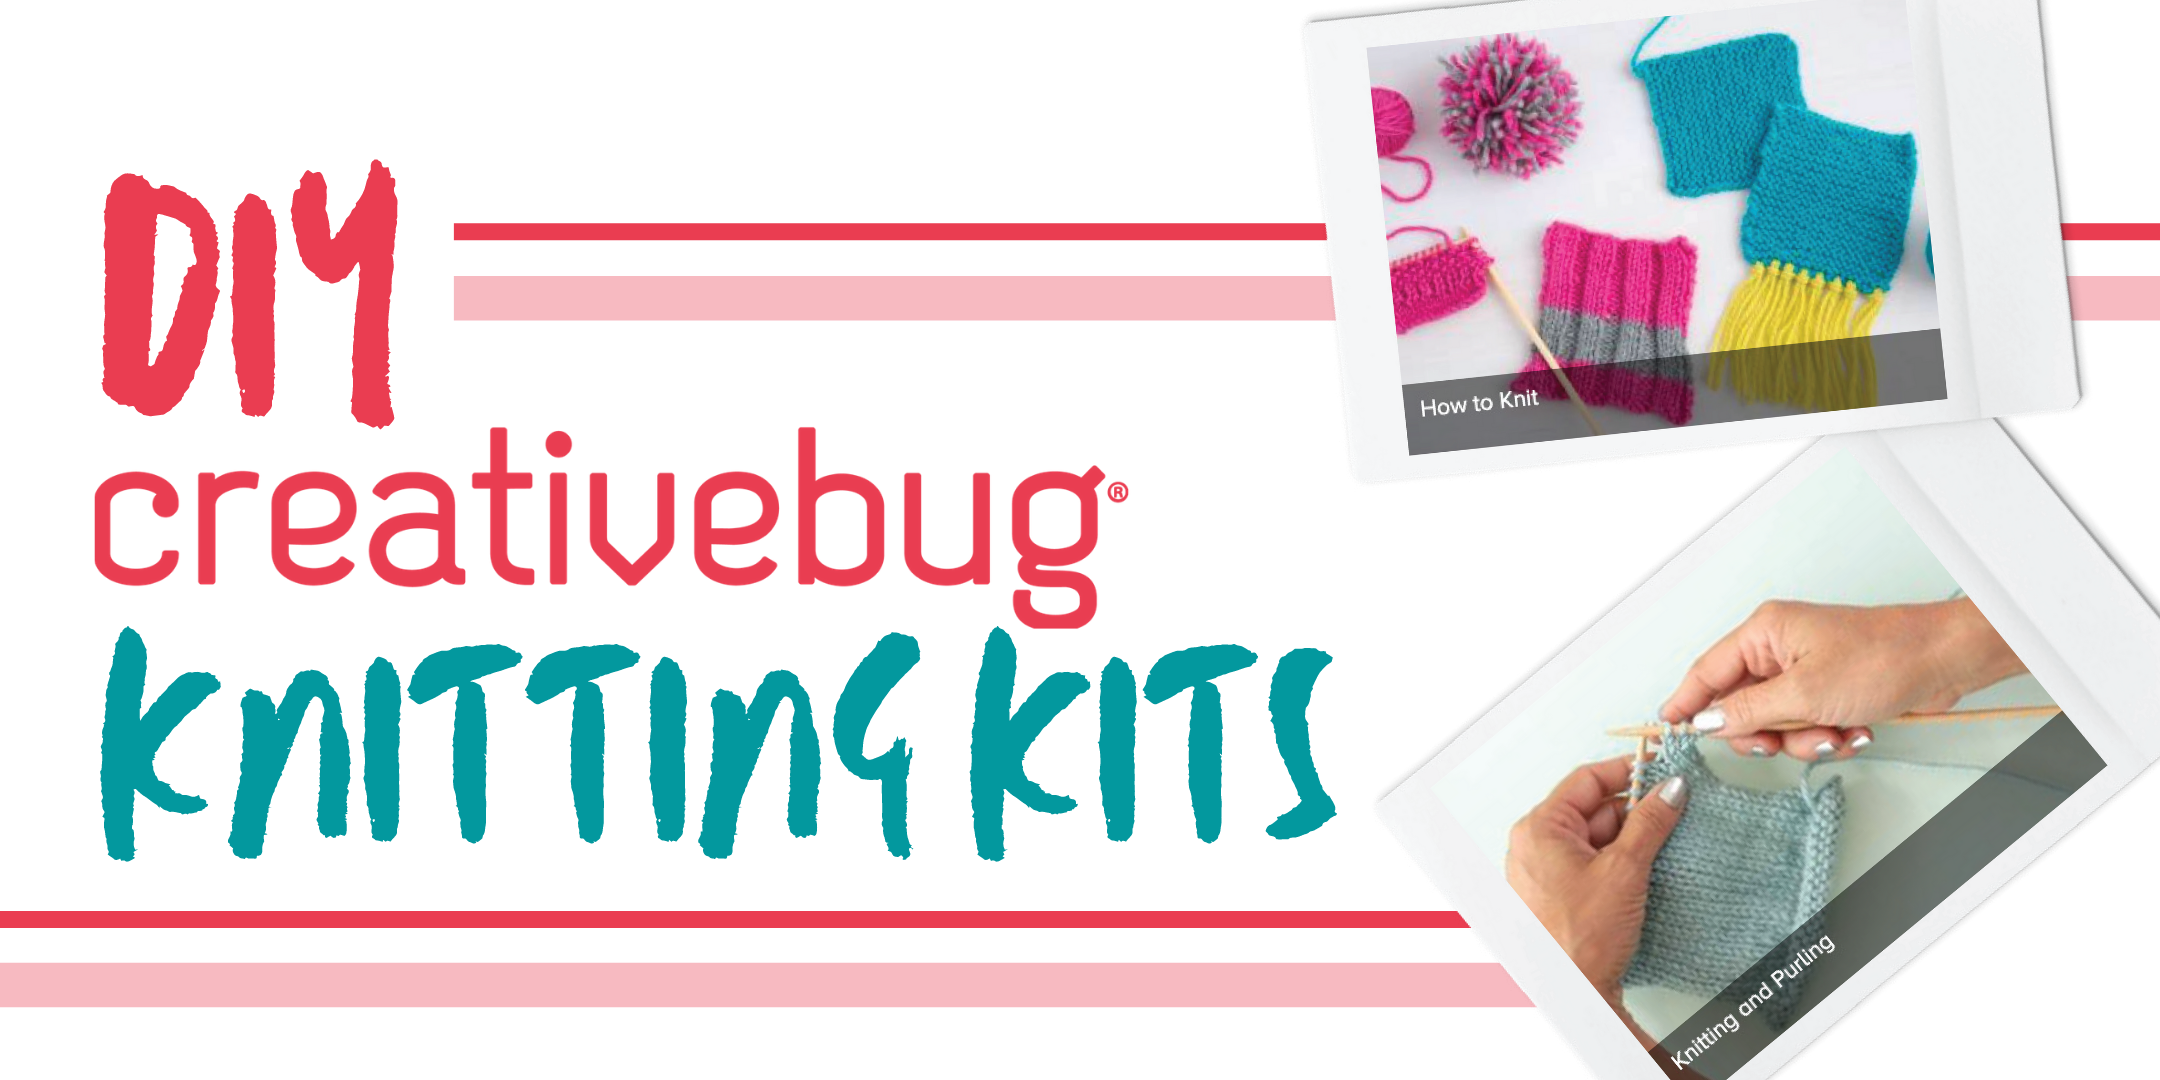 DIY Creativebug Knitting Kits image